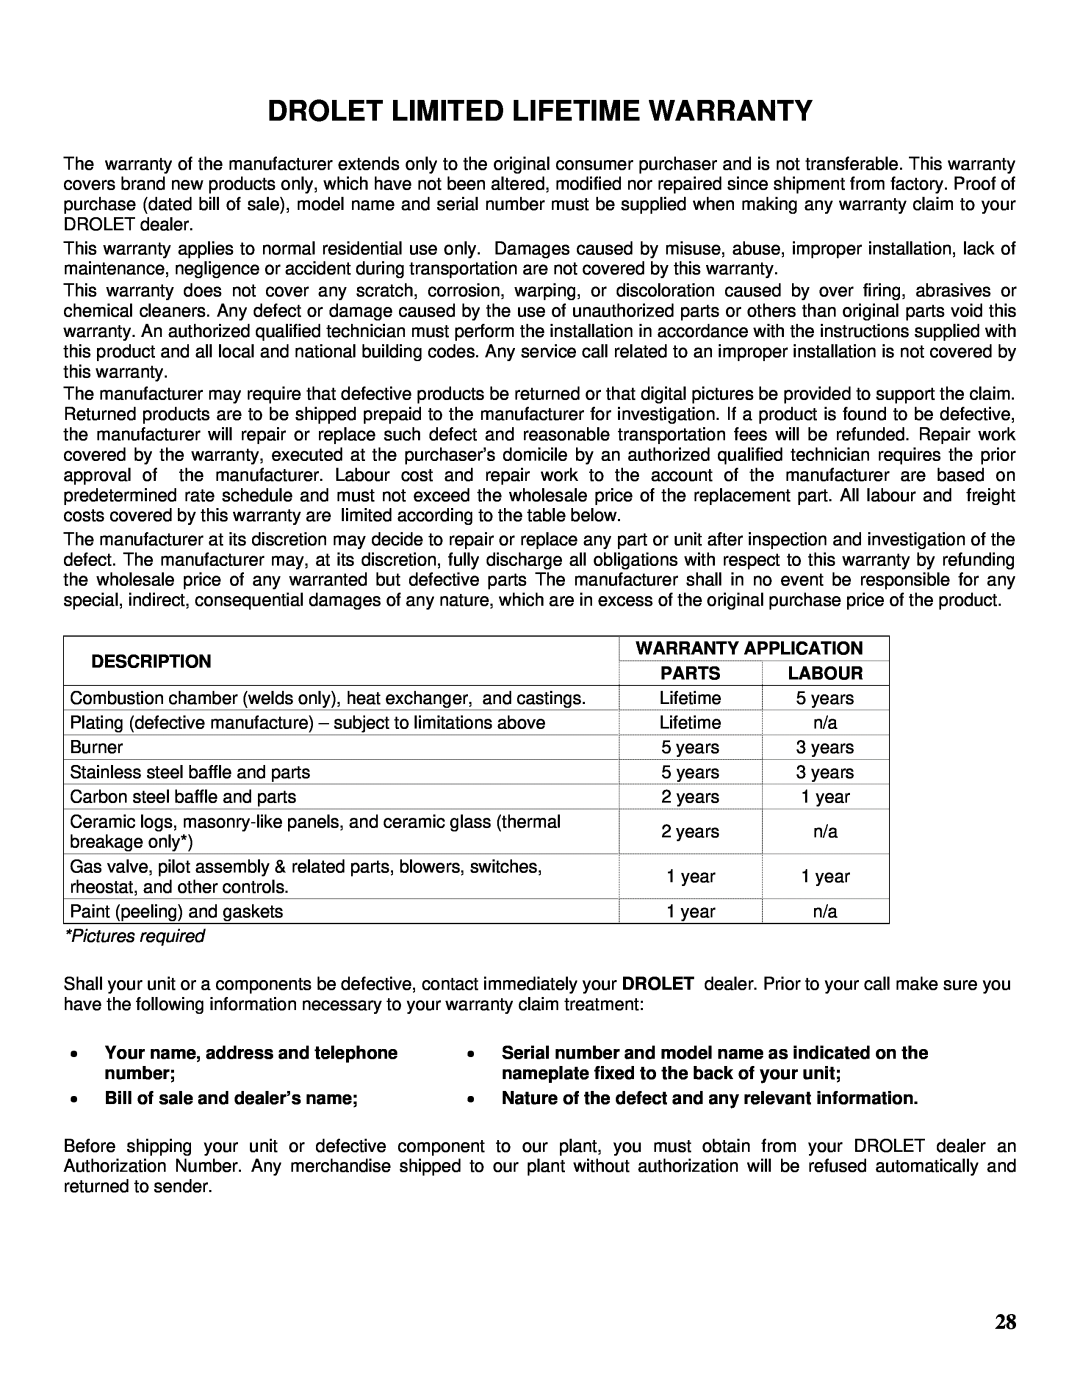 Drolet GTX-I manual Drolet Limited Lifetime Warranty, Description, Warranty Application Parts Labour, number 